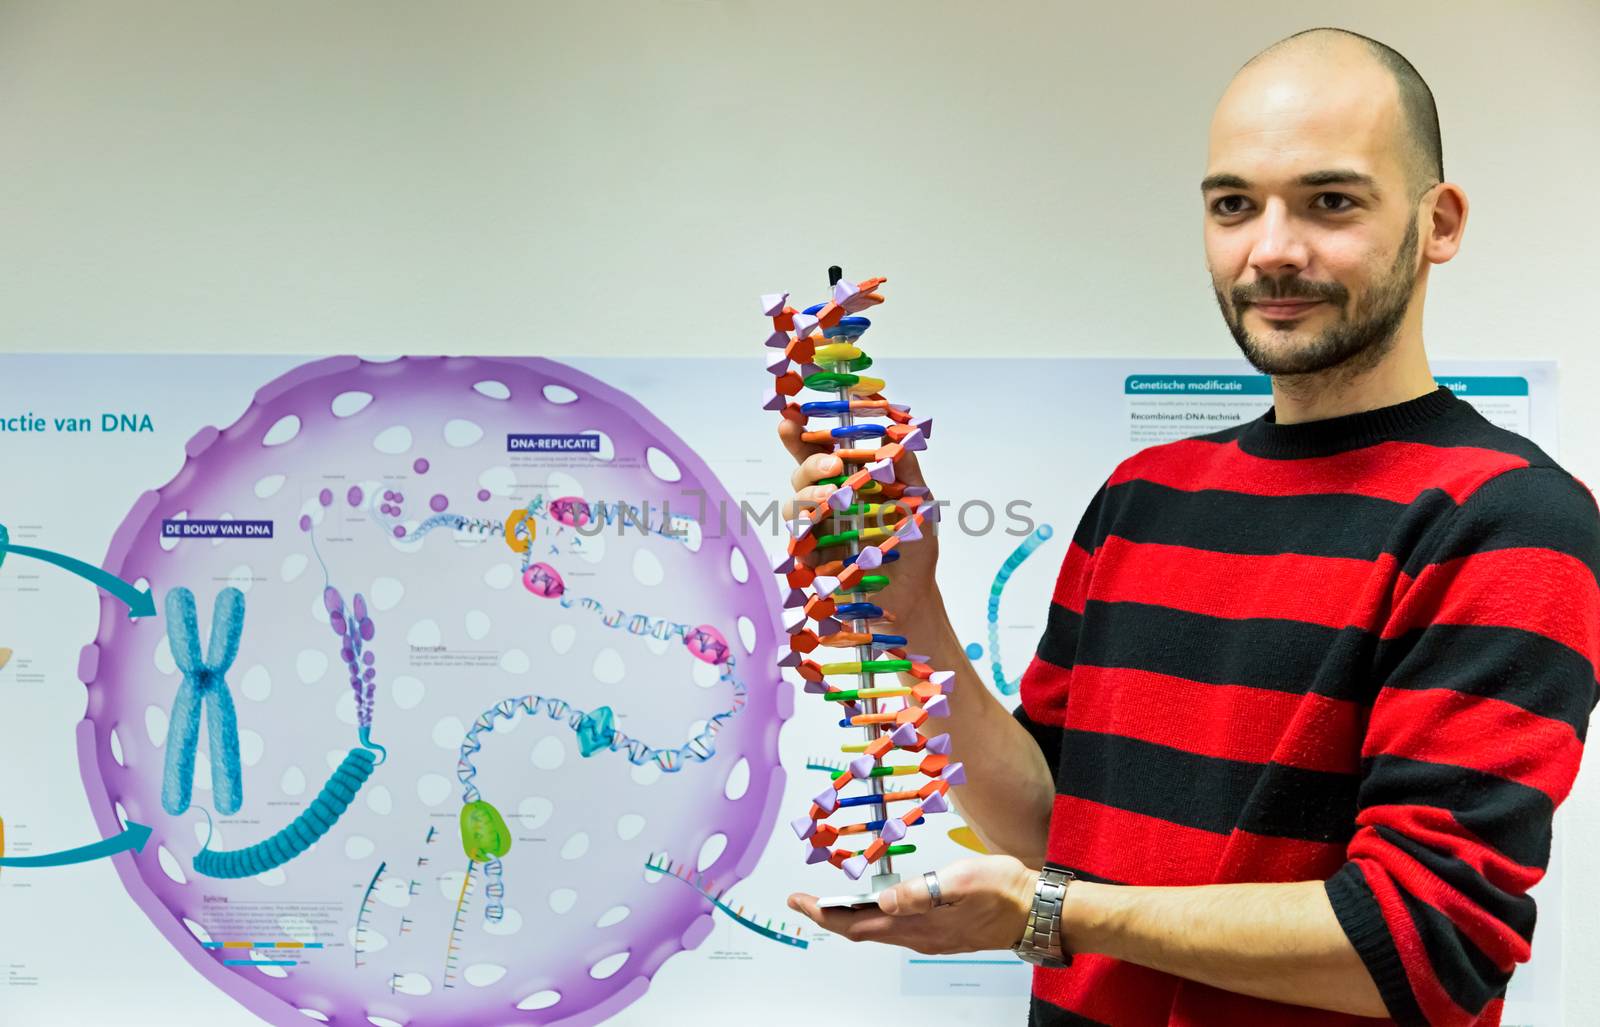 Biology teacher showing DNA model for education in front of wallchart